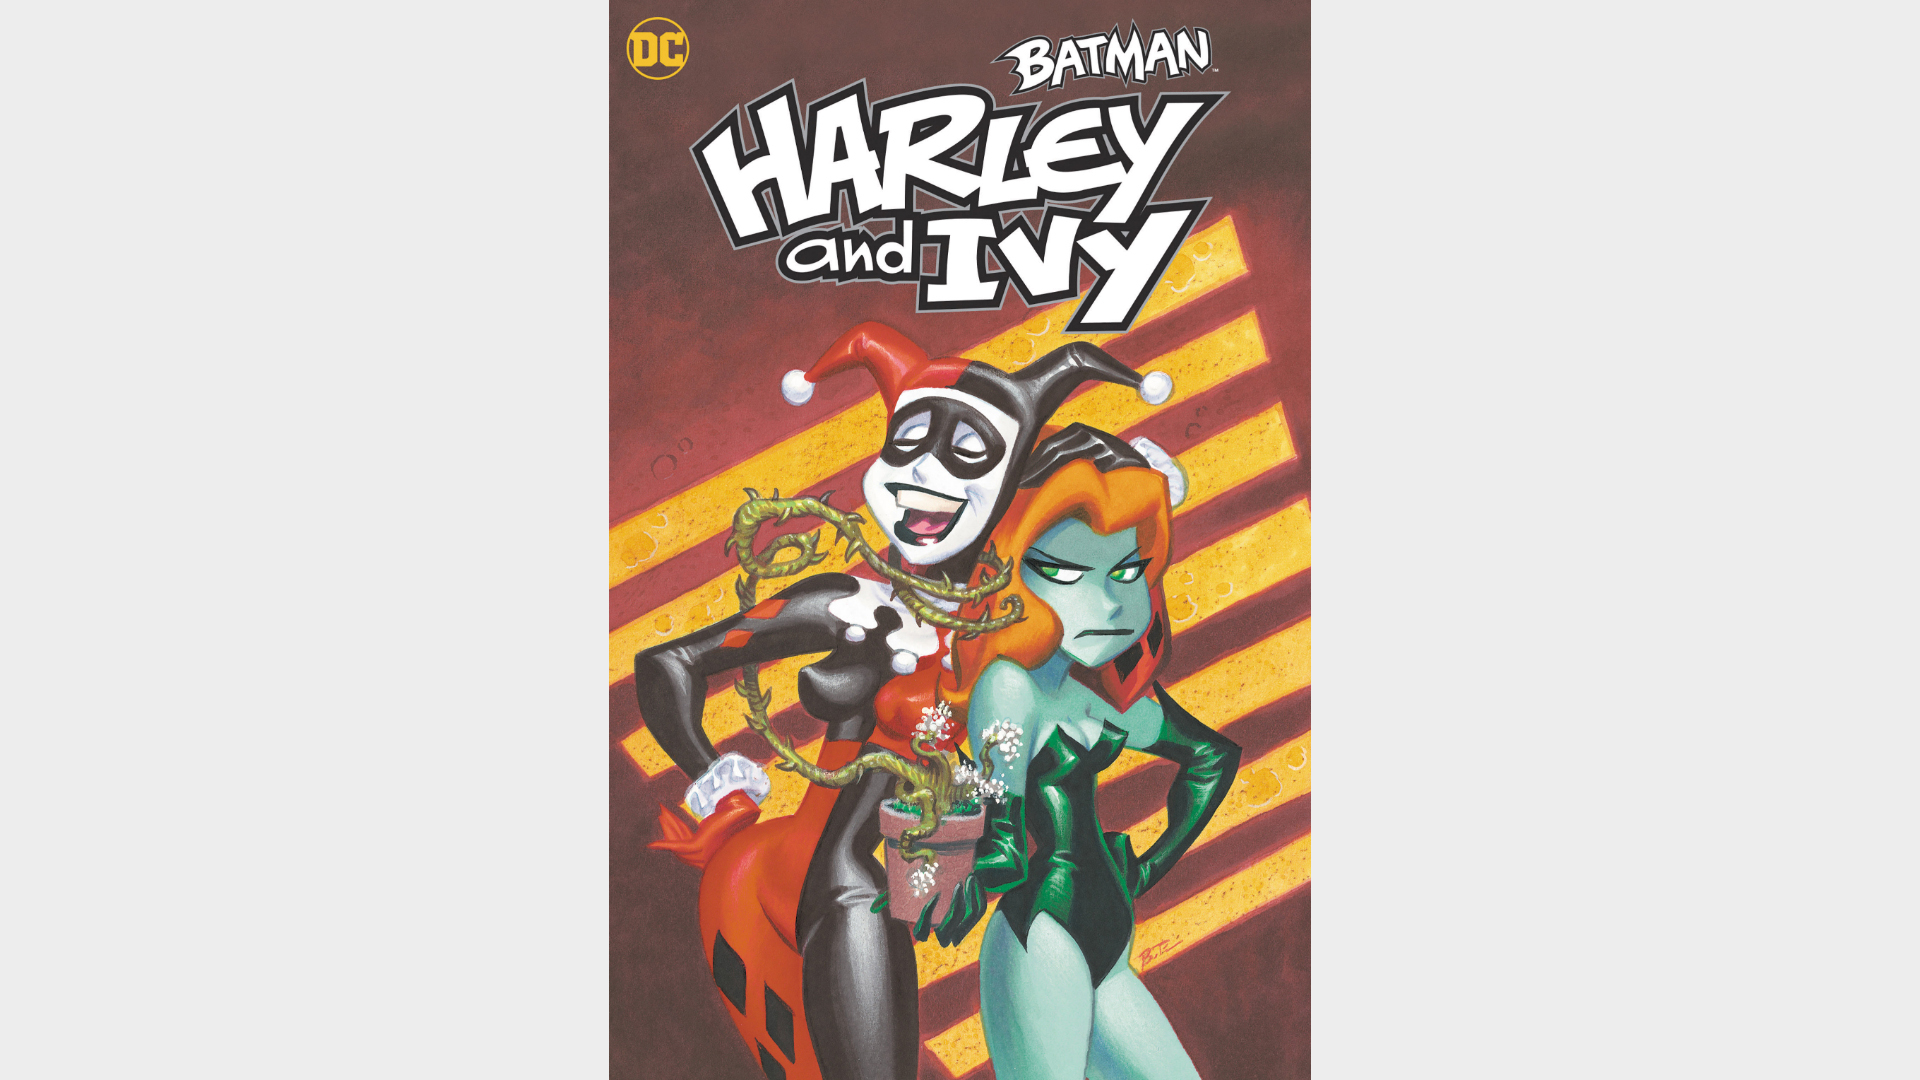 BATMAN: HARLEY AND IVY